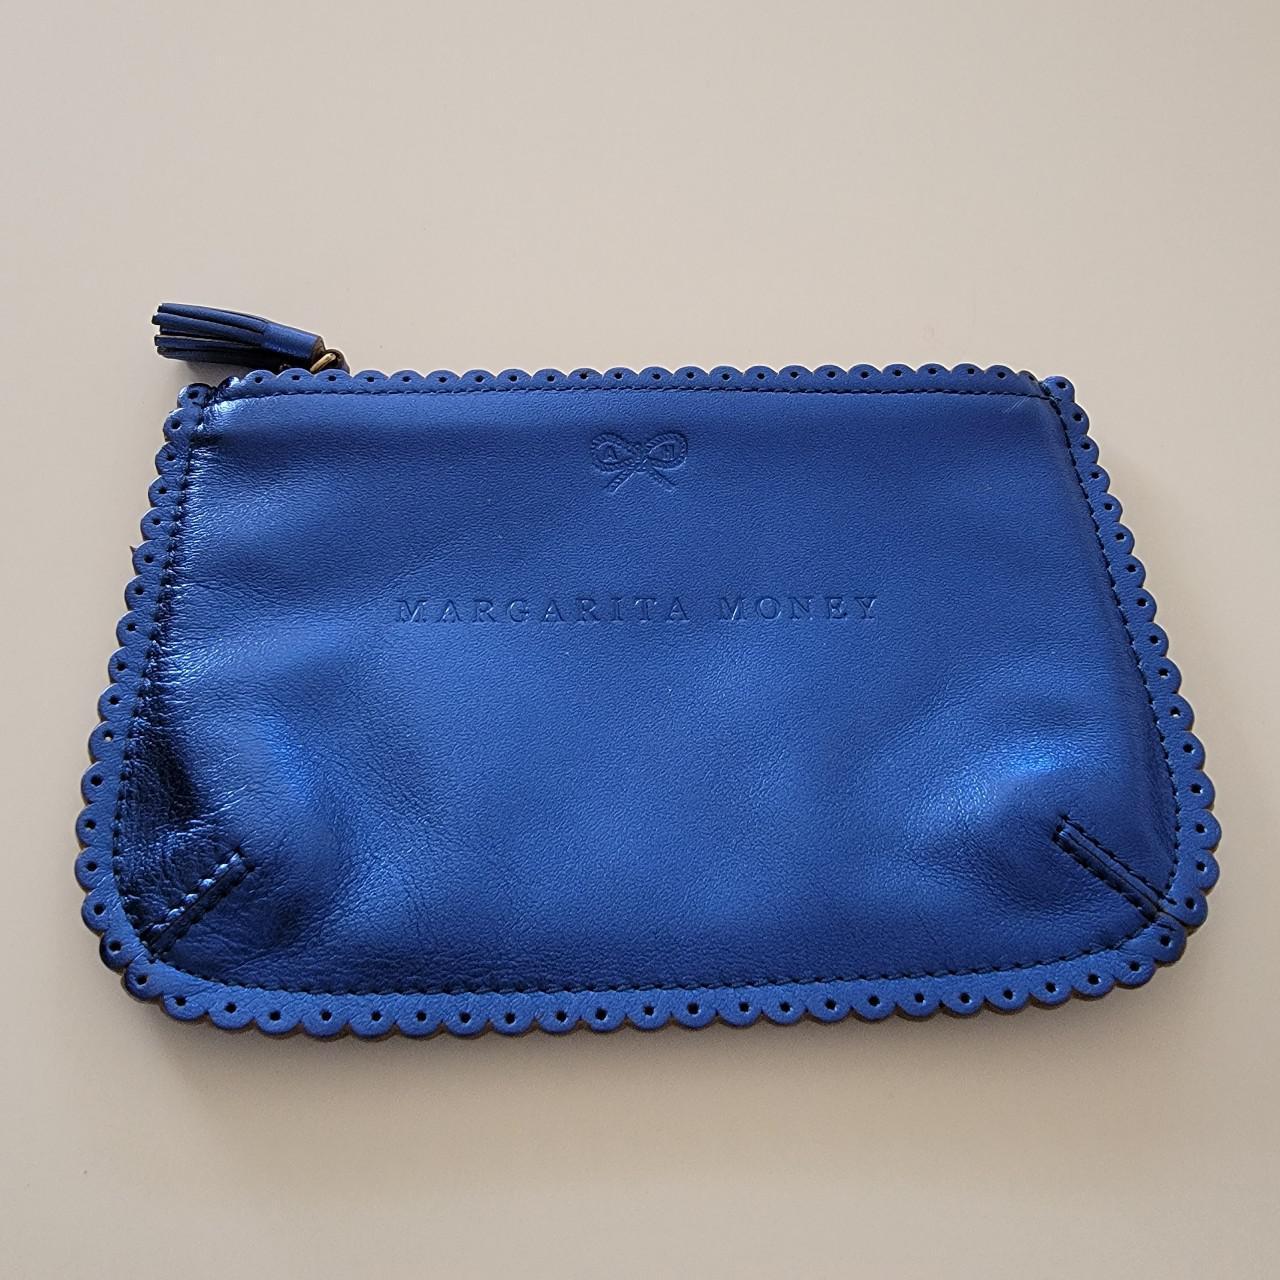 Anya Hindmarch Women's Blue Bag